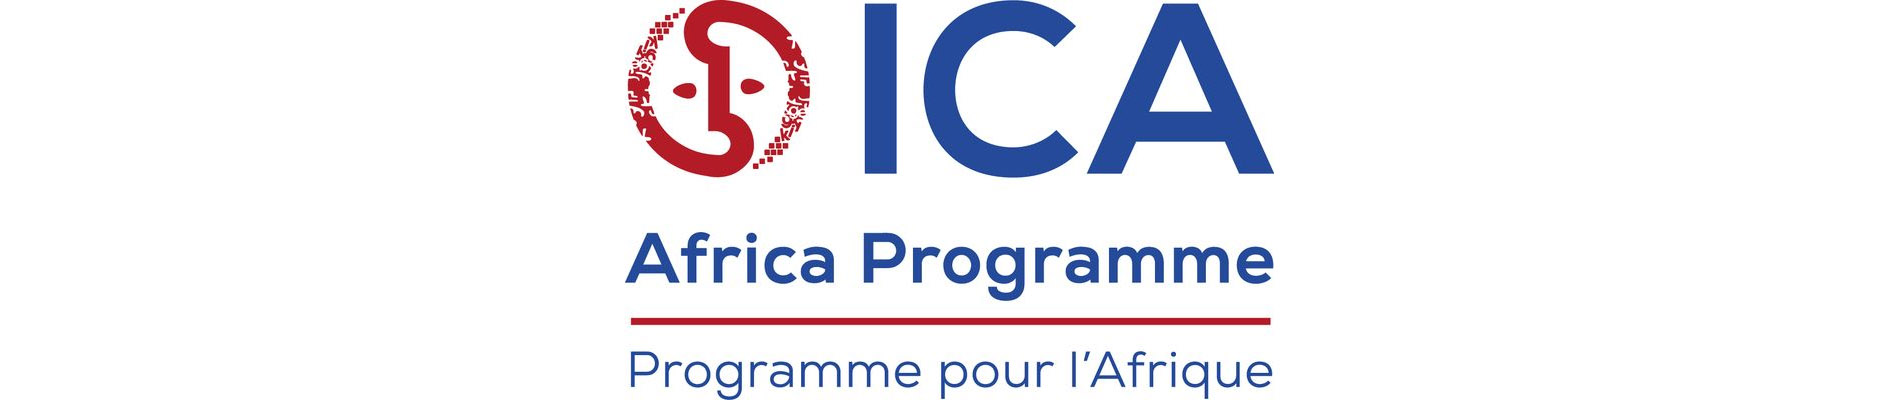 africa_programme_logo